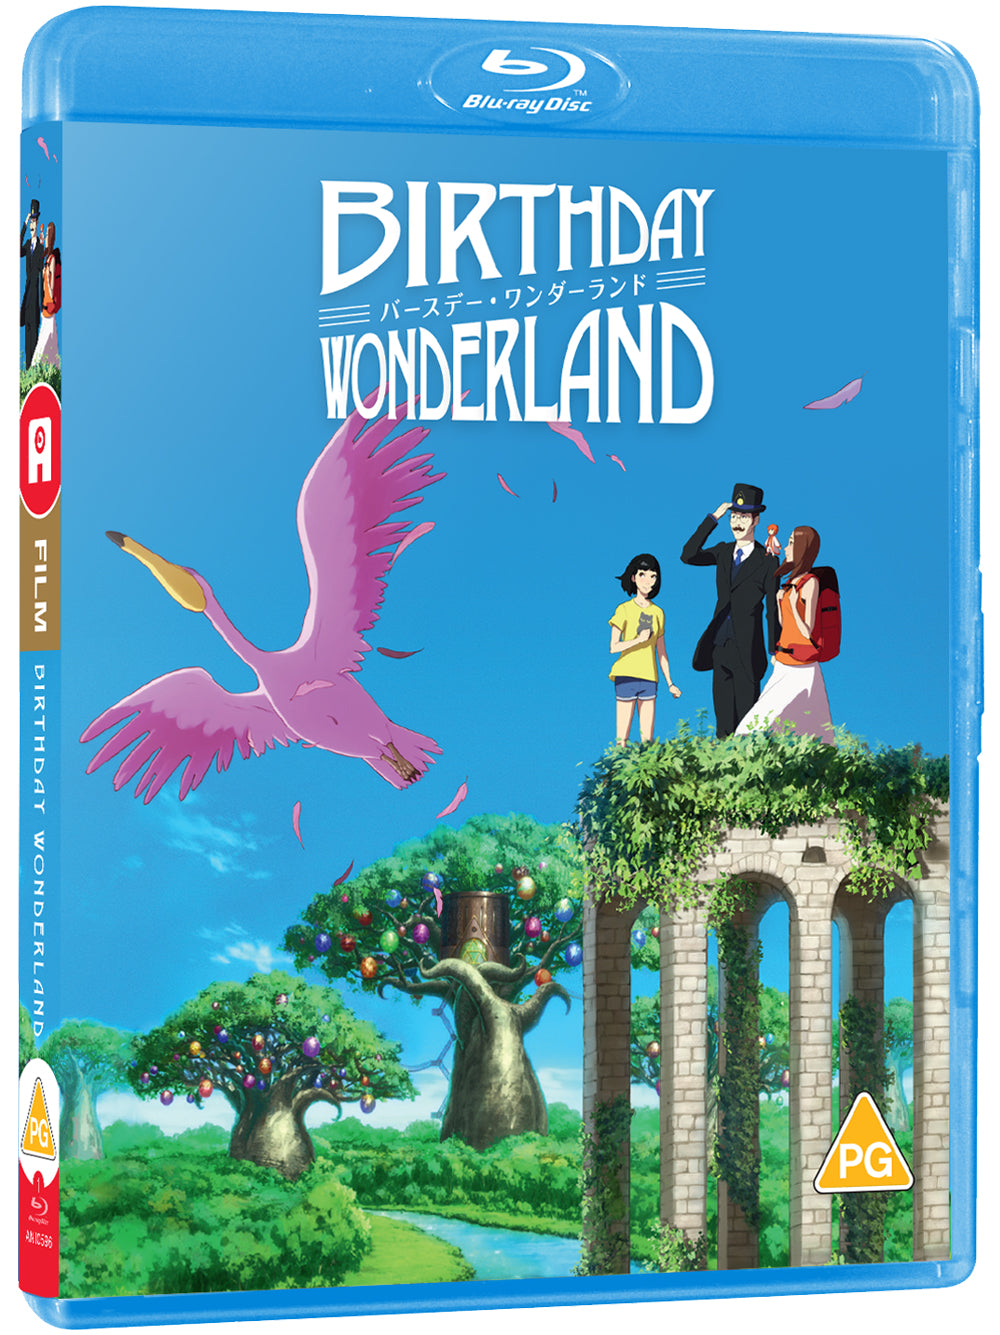 Alice in wonderland anime - YouTube